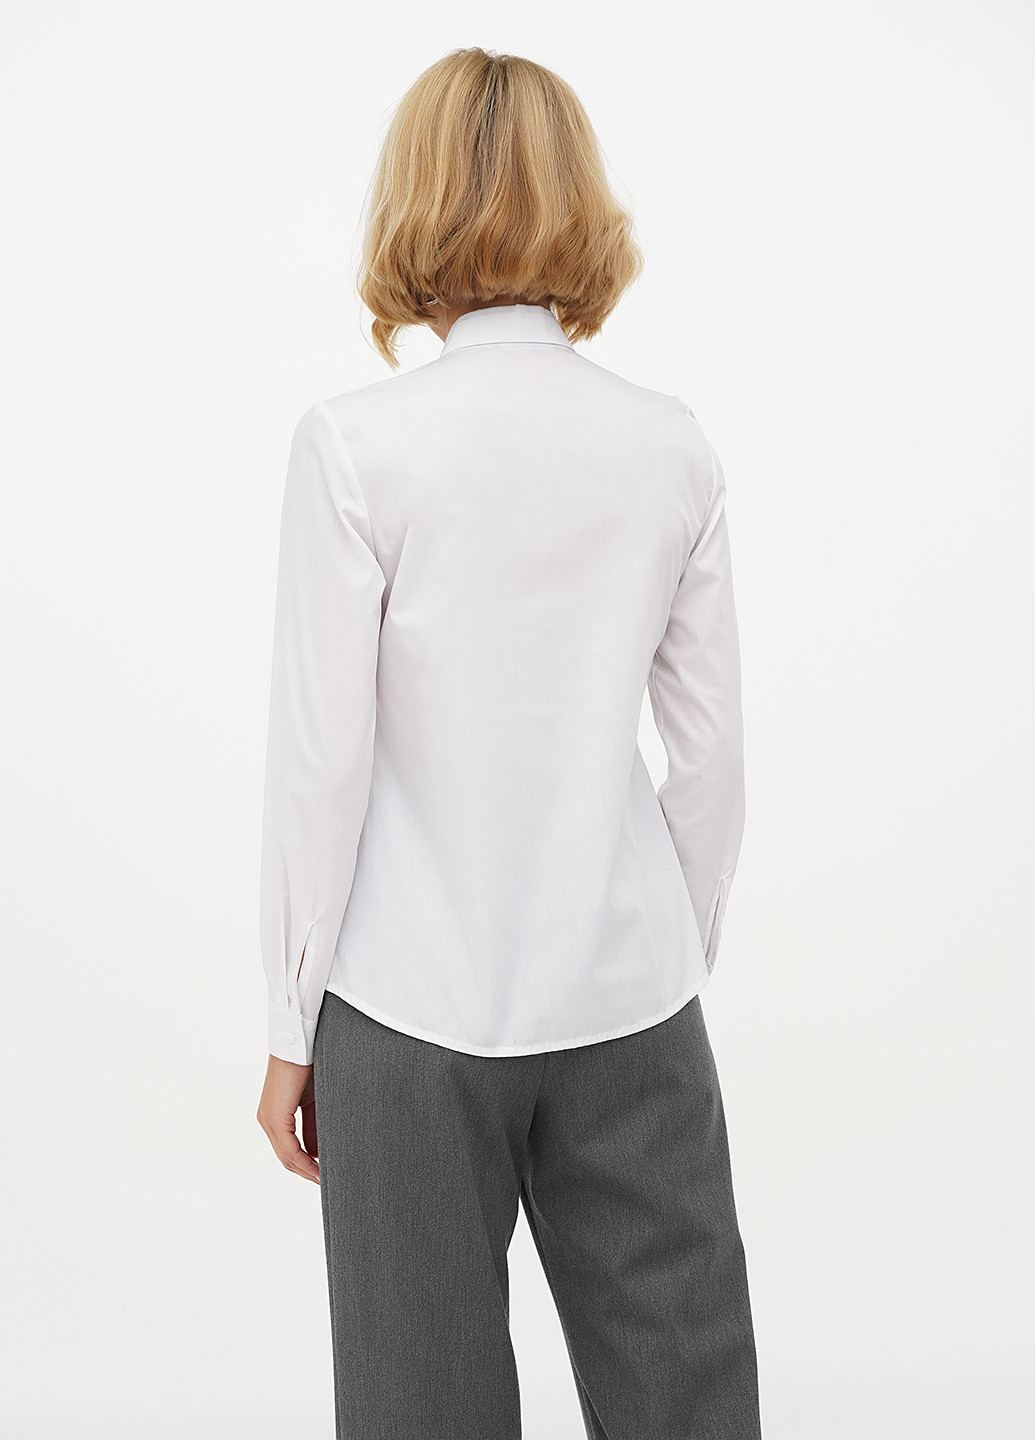 Біла демісезонна блуза напівприлегла KASTA design